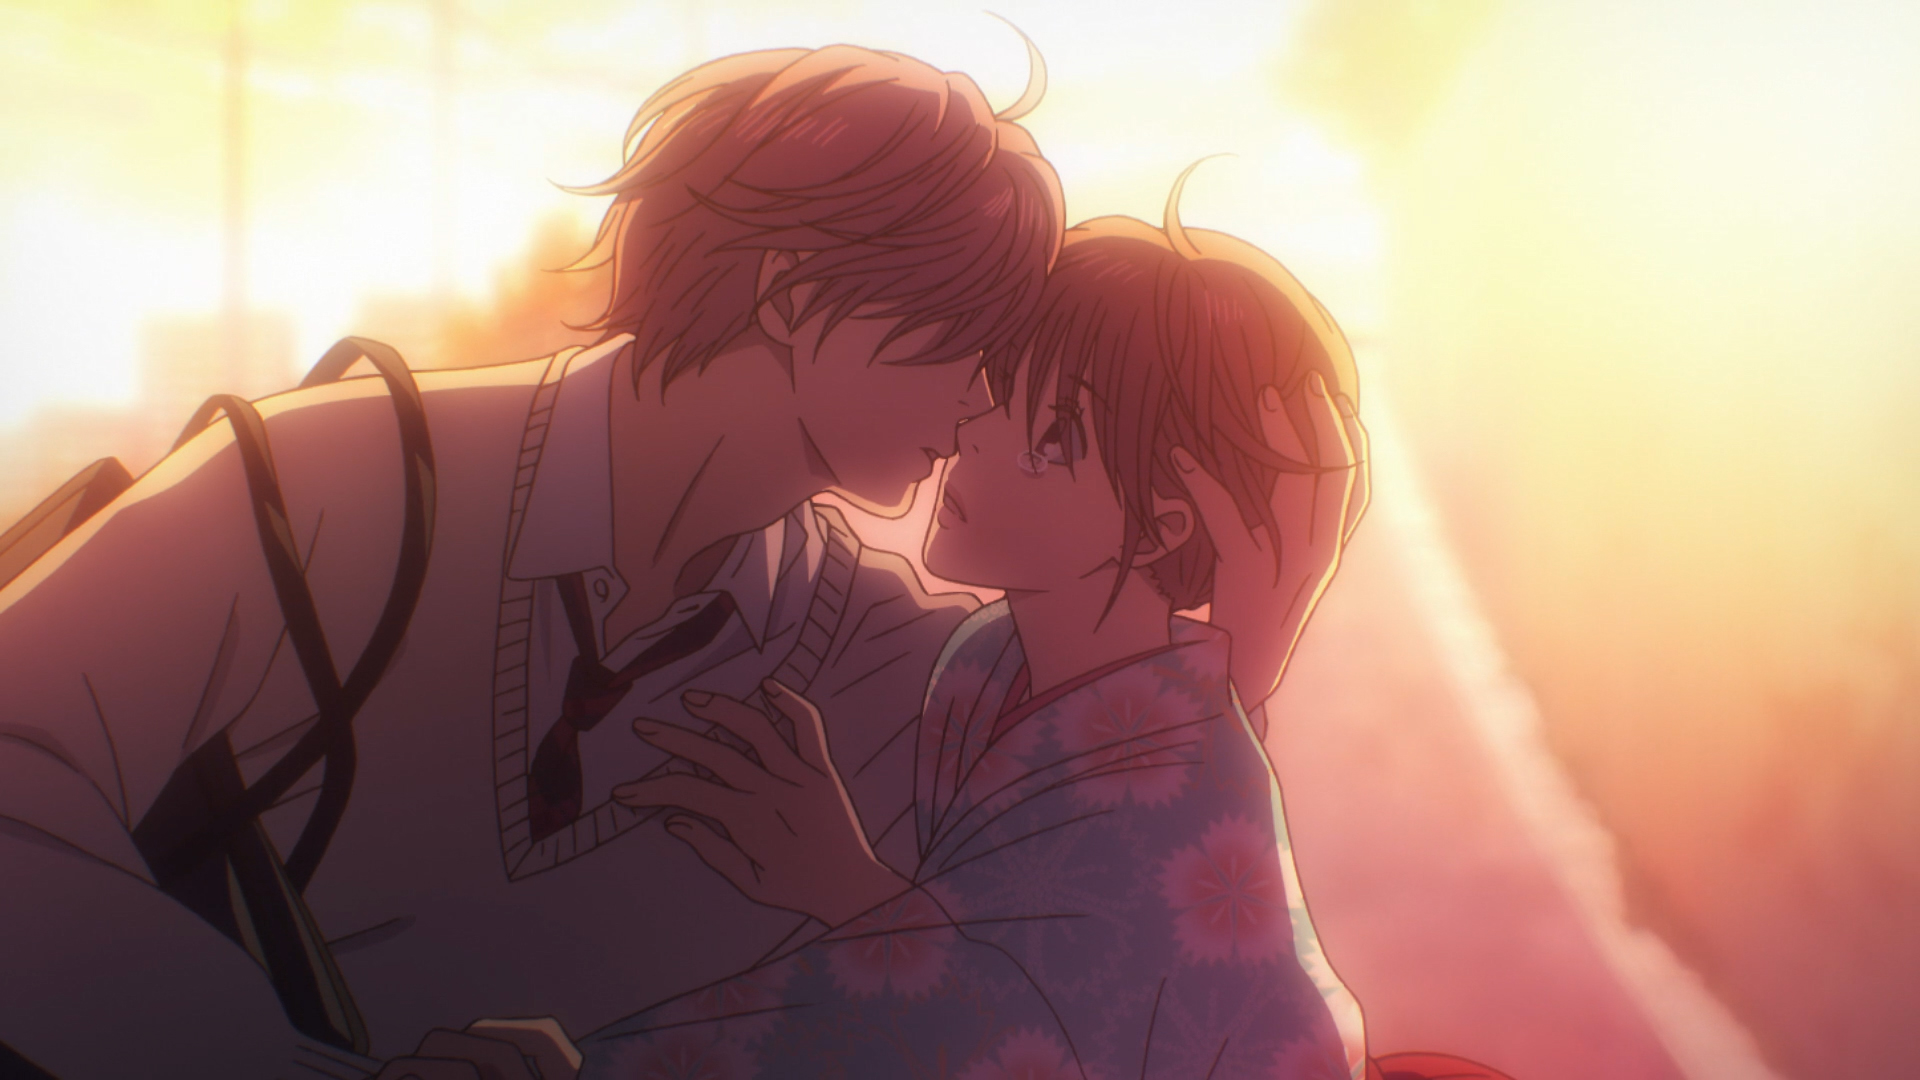 Image of a sad anime couple sharing a last kiss